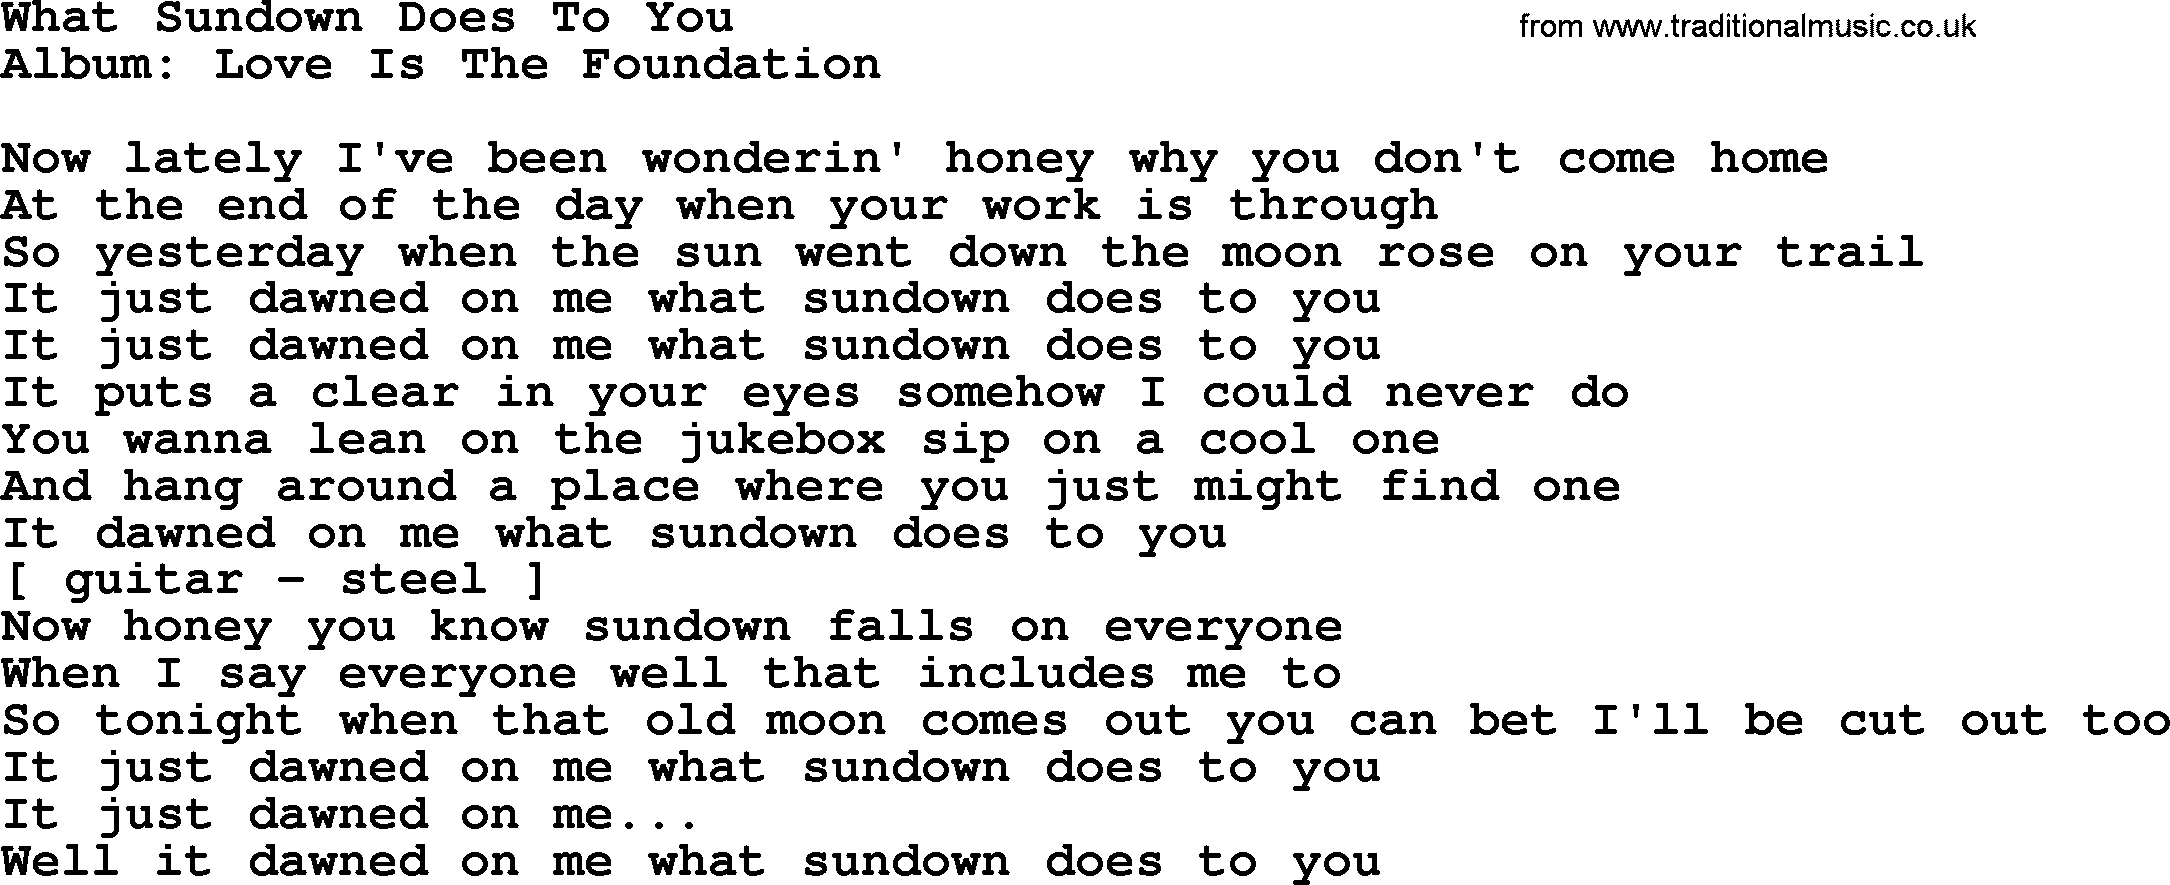 Loretta Lynn song: What Sundown Does To You lyrics